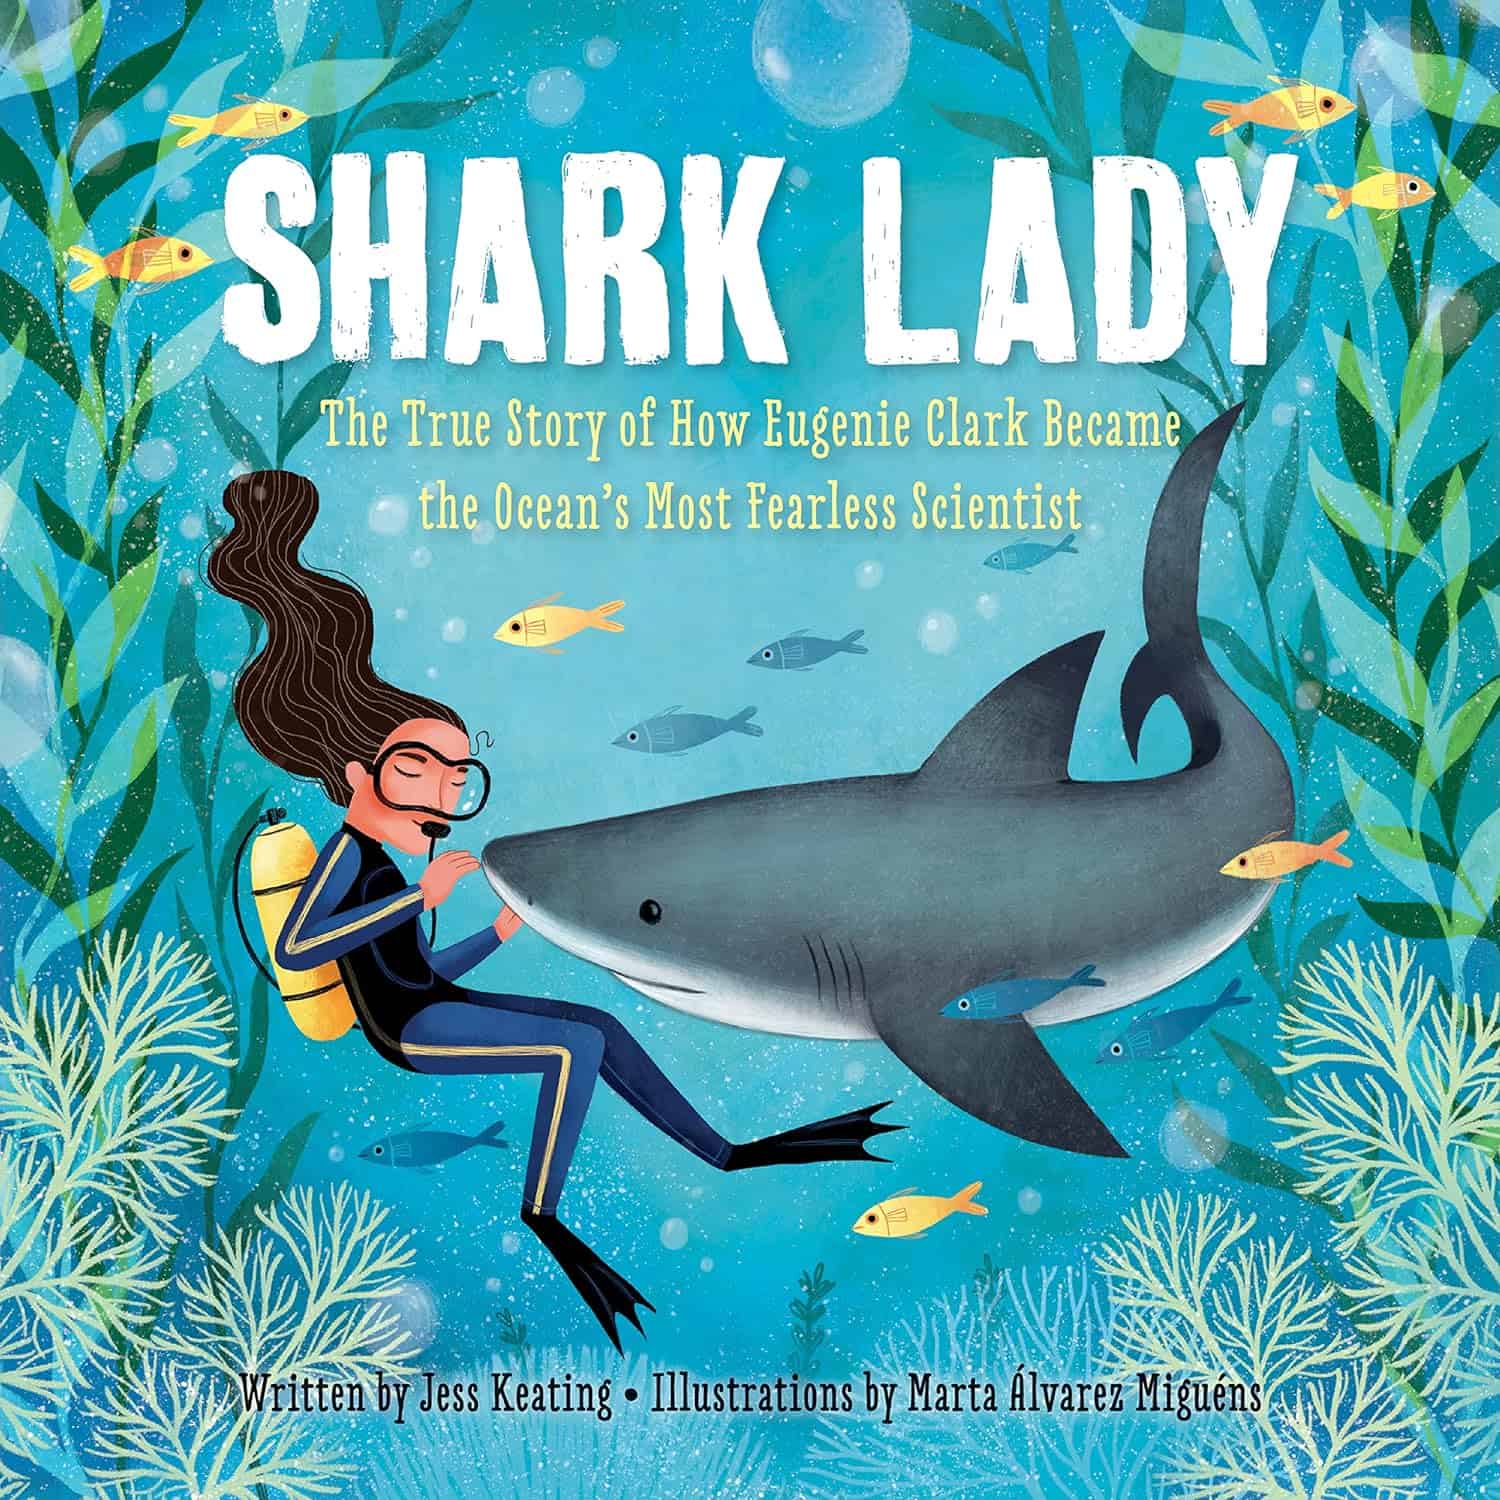 Shark Lady: The Inspiring Story of Eugenie Clark